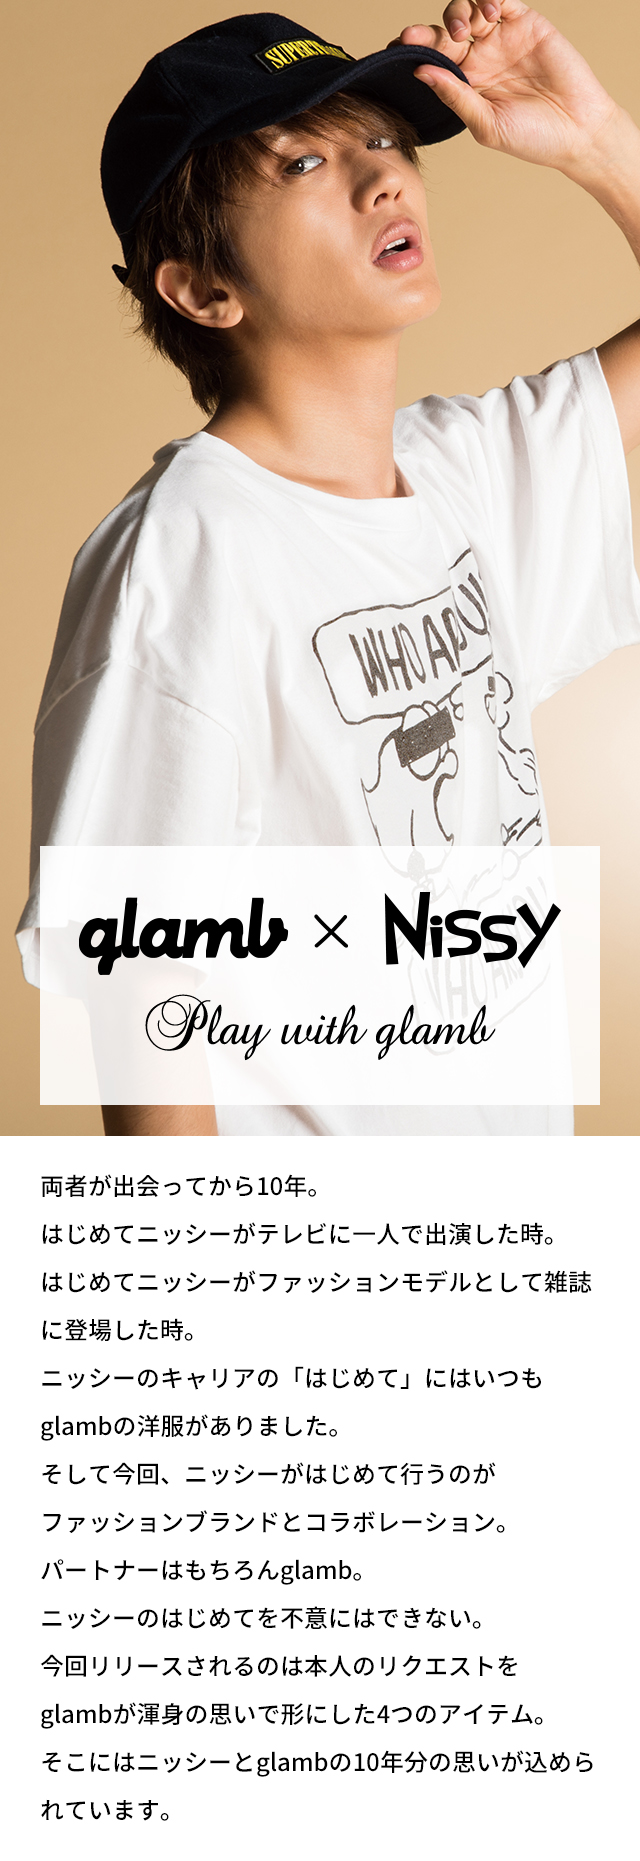 Nissy glamb